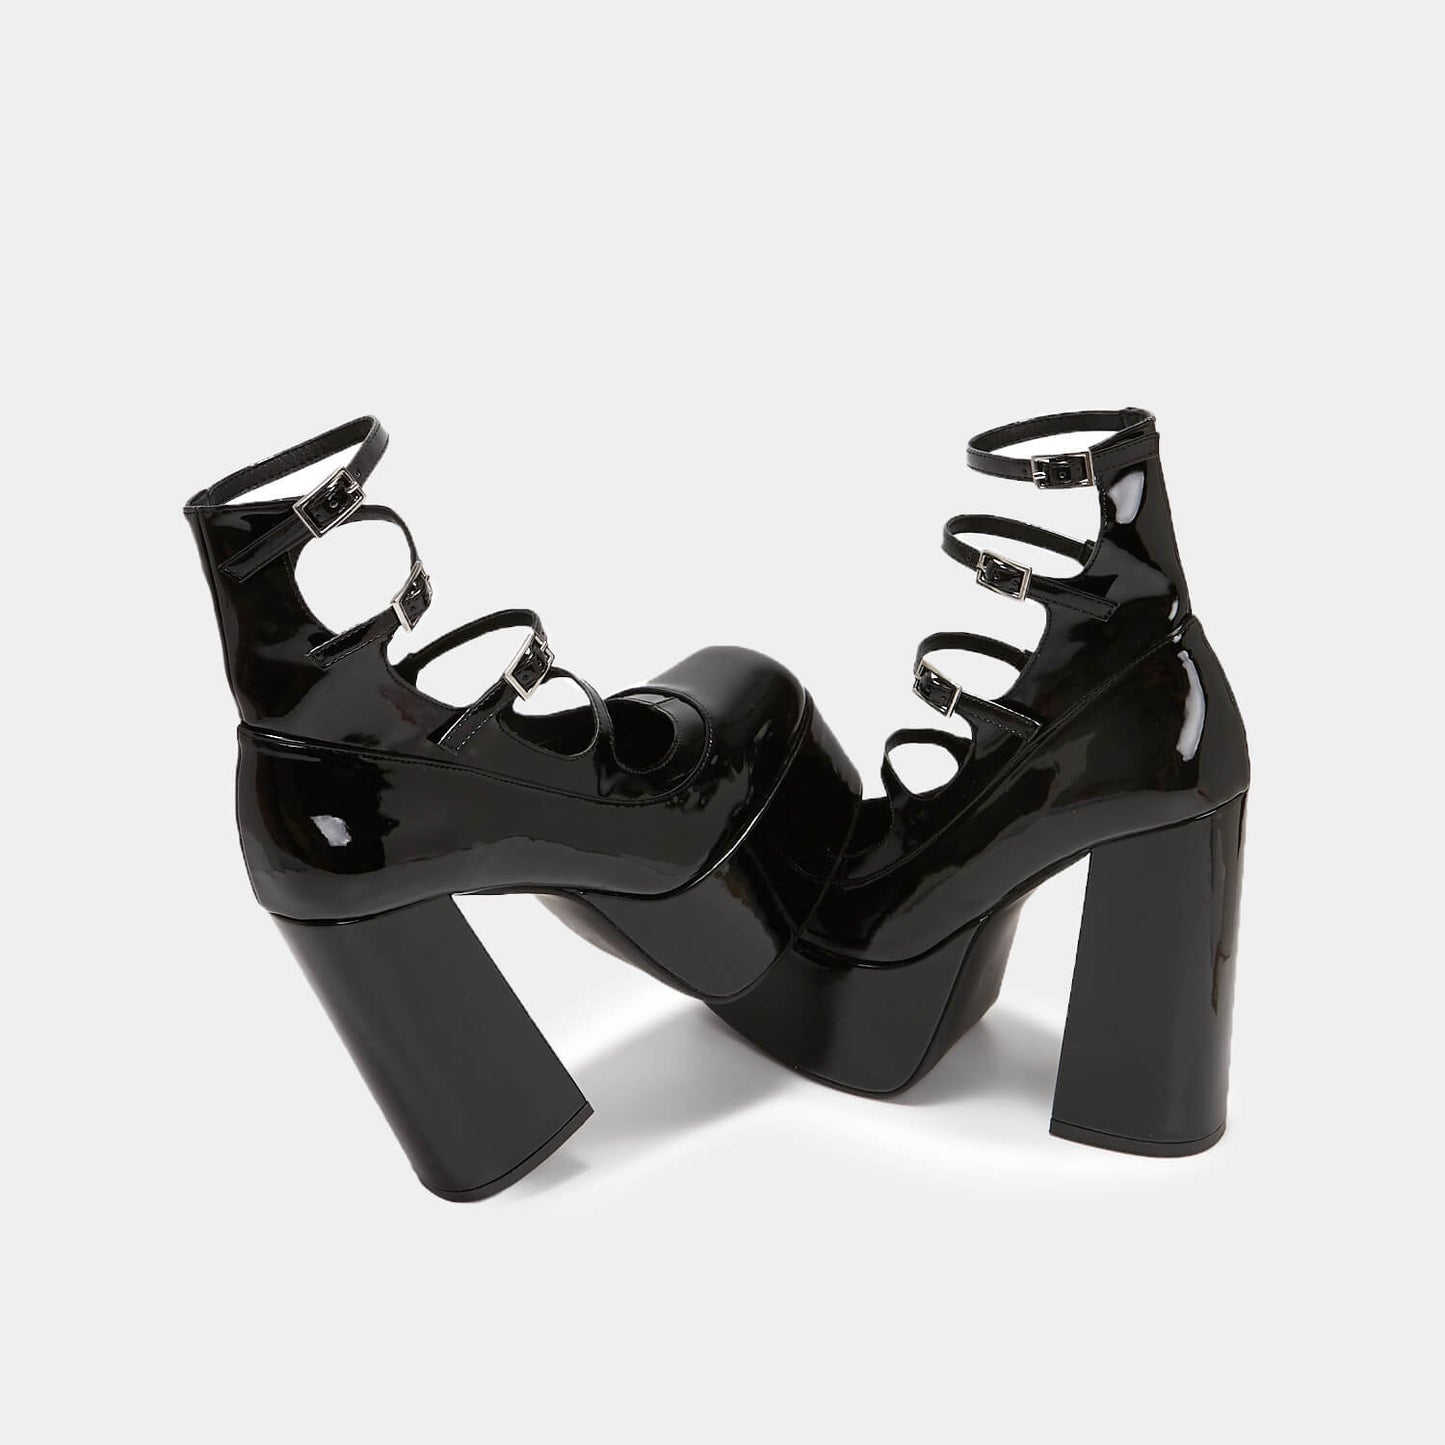 Gurren Strappy Black Patent Platform Heels - Shoes - KOI Footwear - Black - Back View